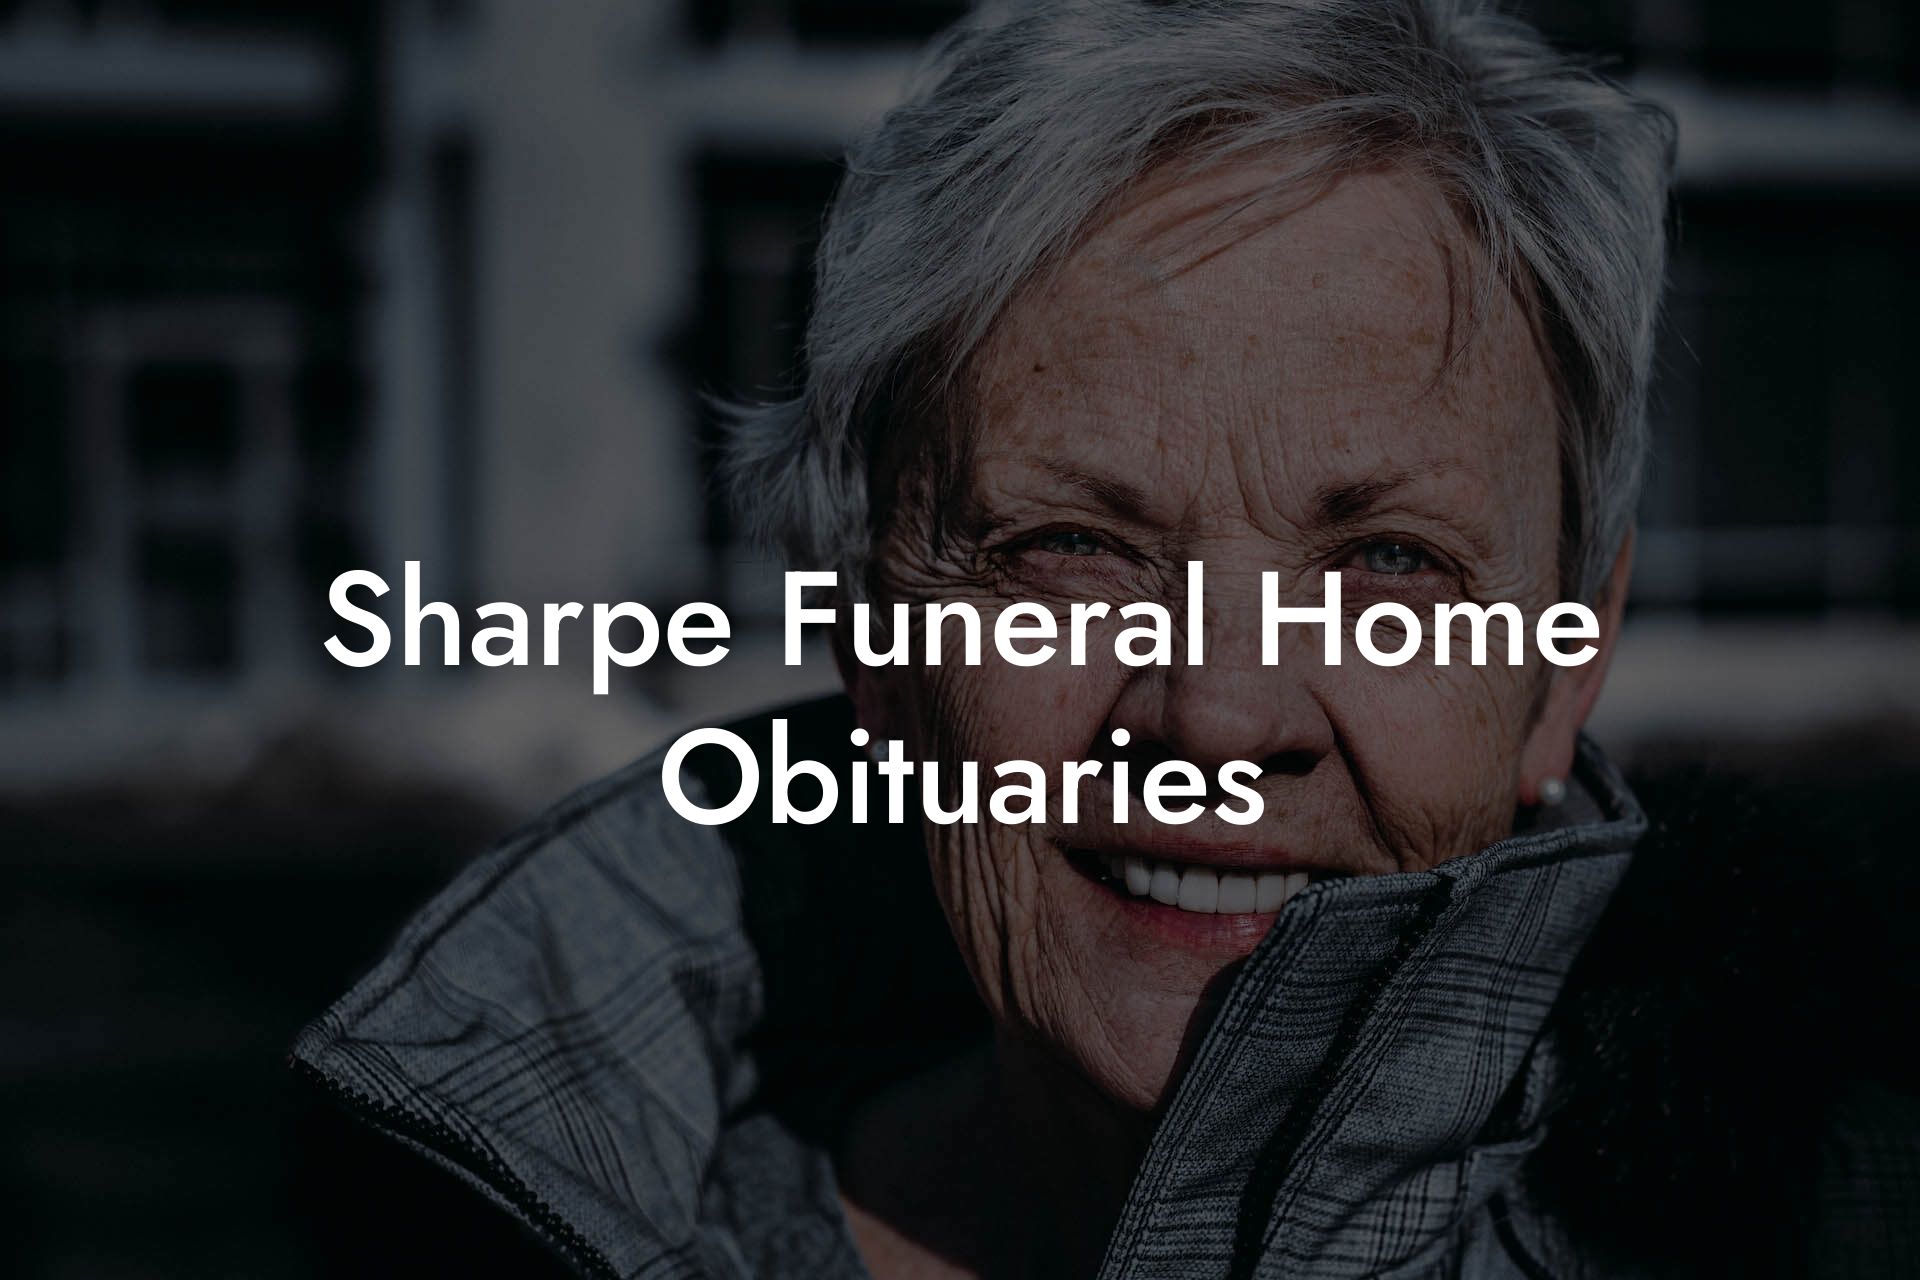 Sharpe Funeral Home Obituaries